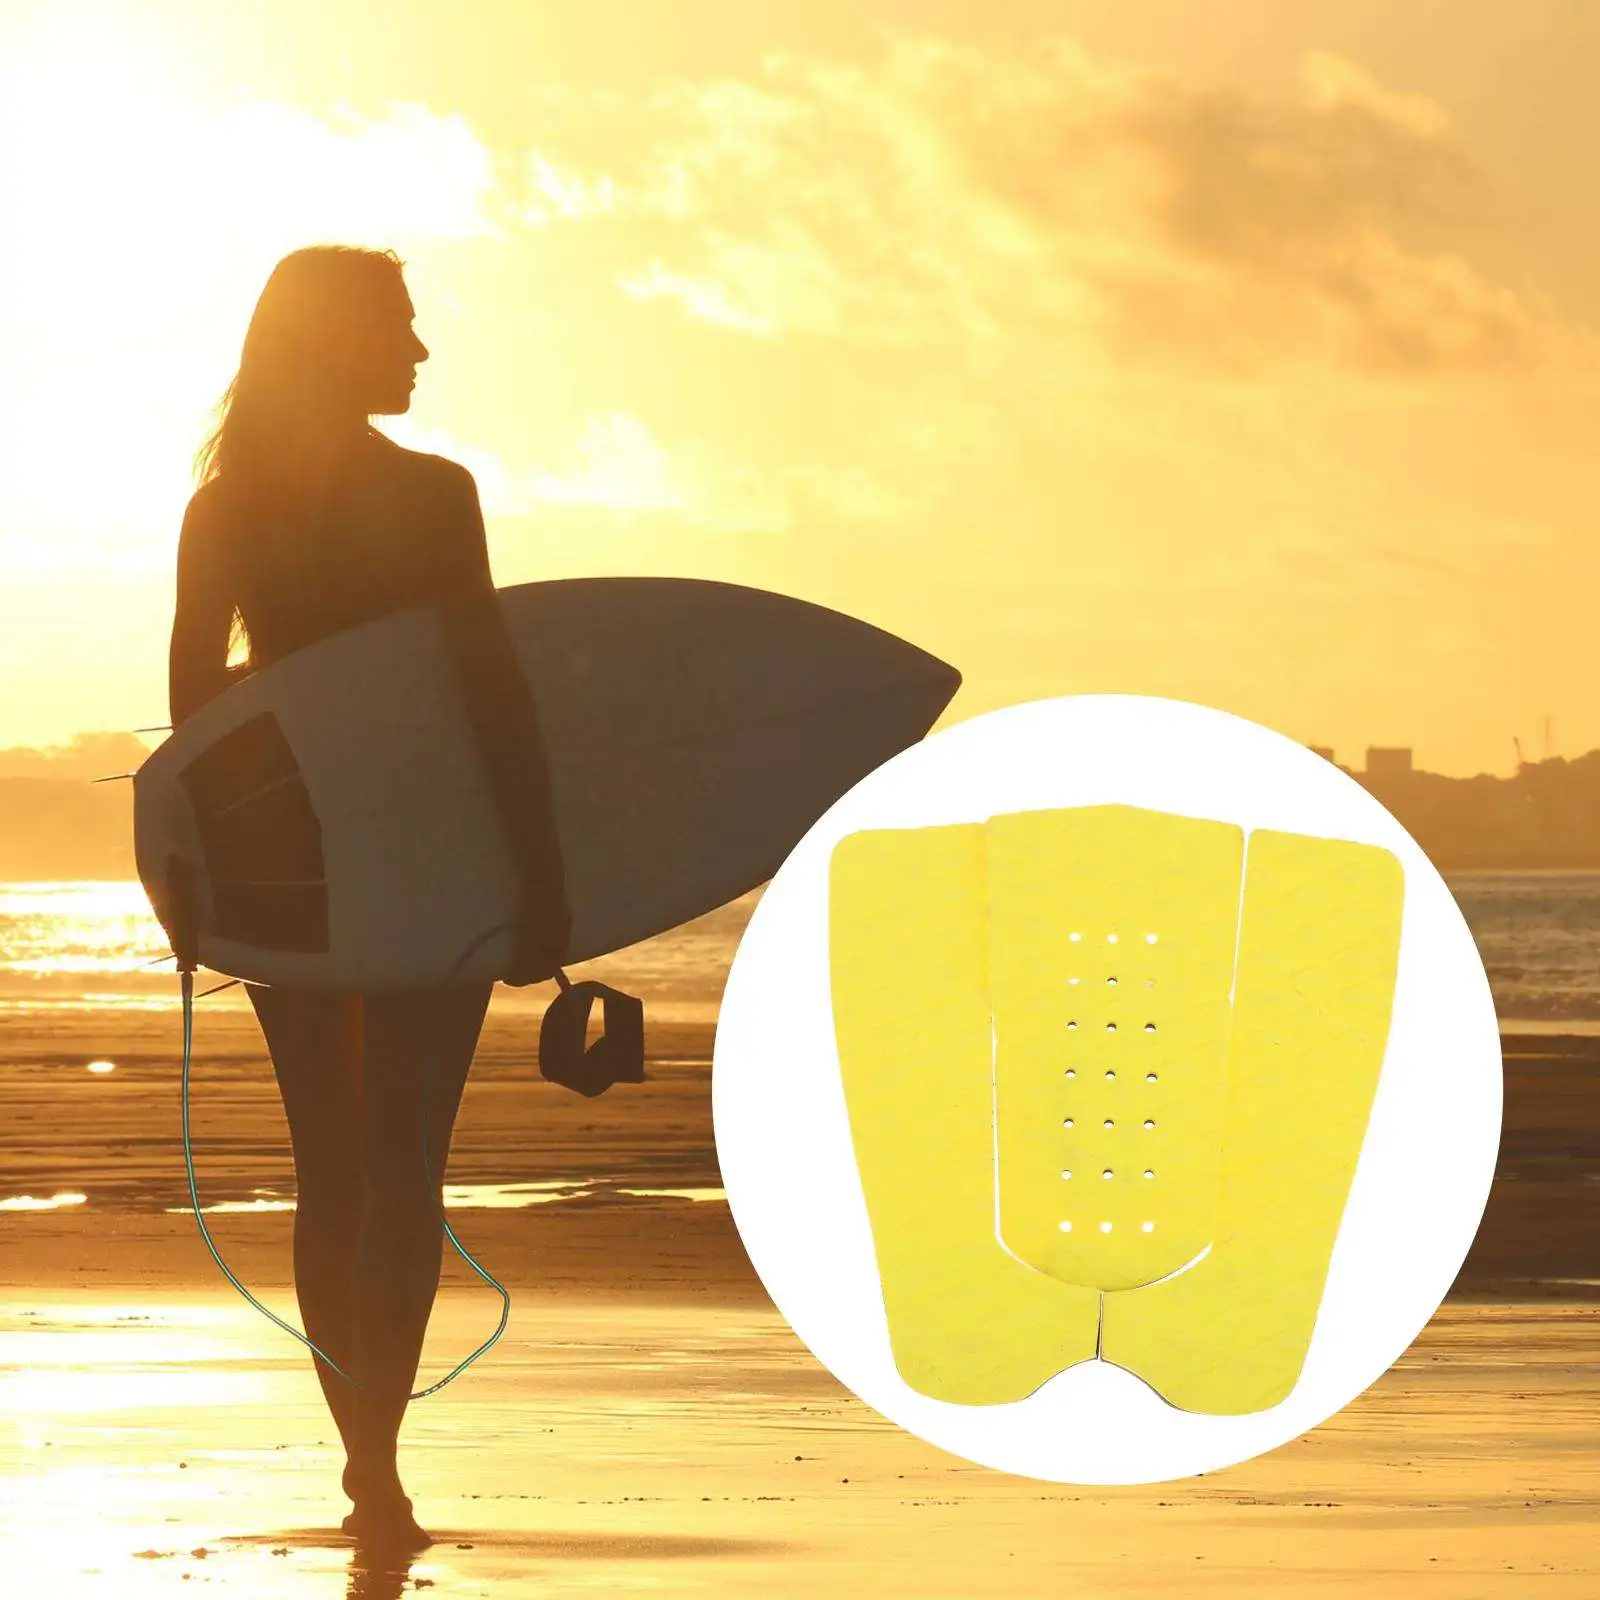 3x EVA Surfboard Traction Pad Anti-slip Longboard Skimboard Grip Surf Deck Tail Pads Water Sports Accessories